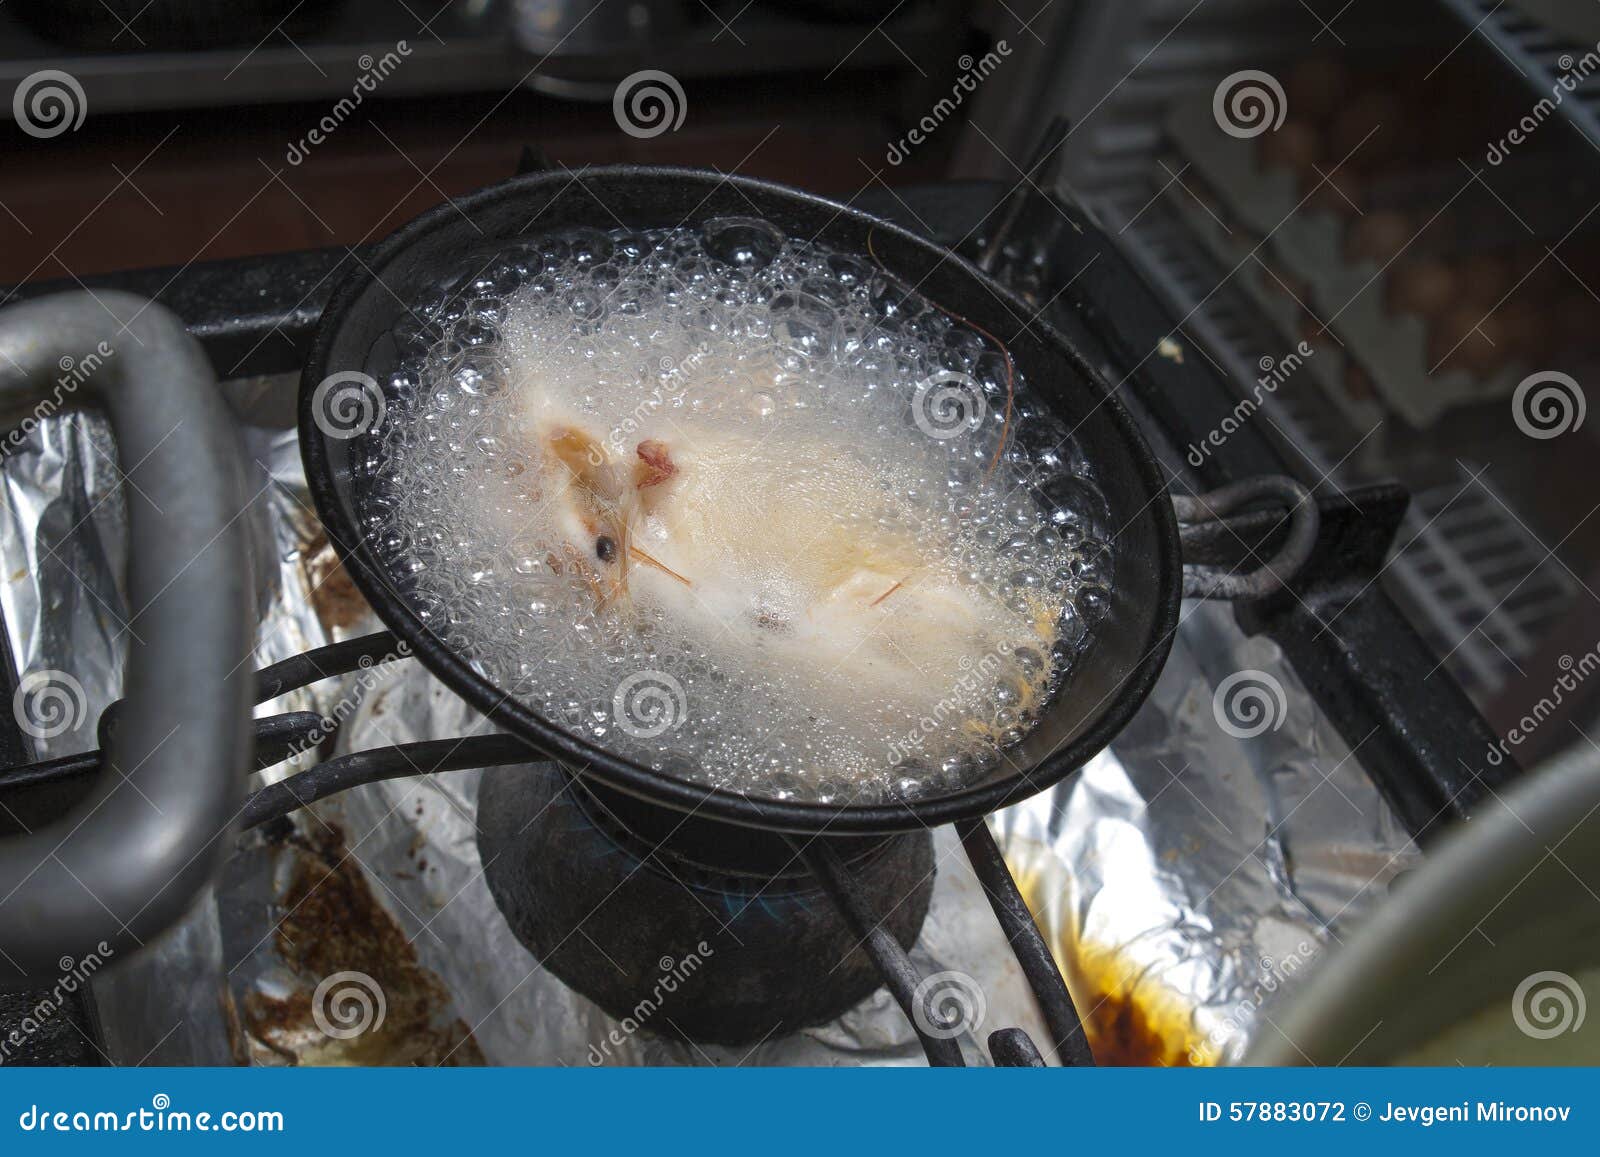 shrimps boil in metallic bowl